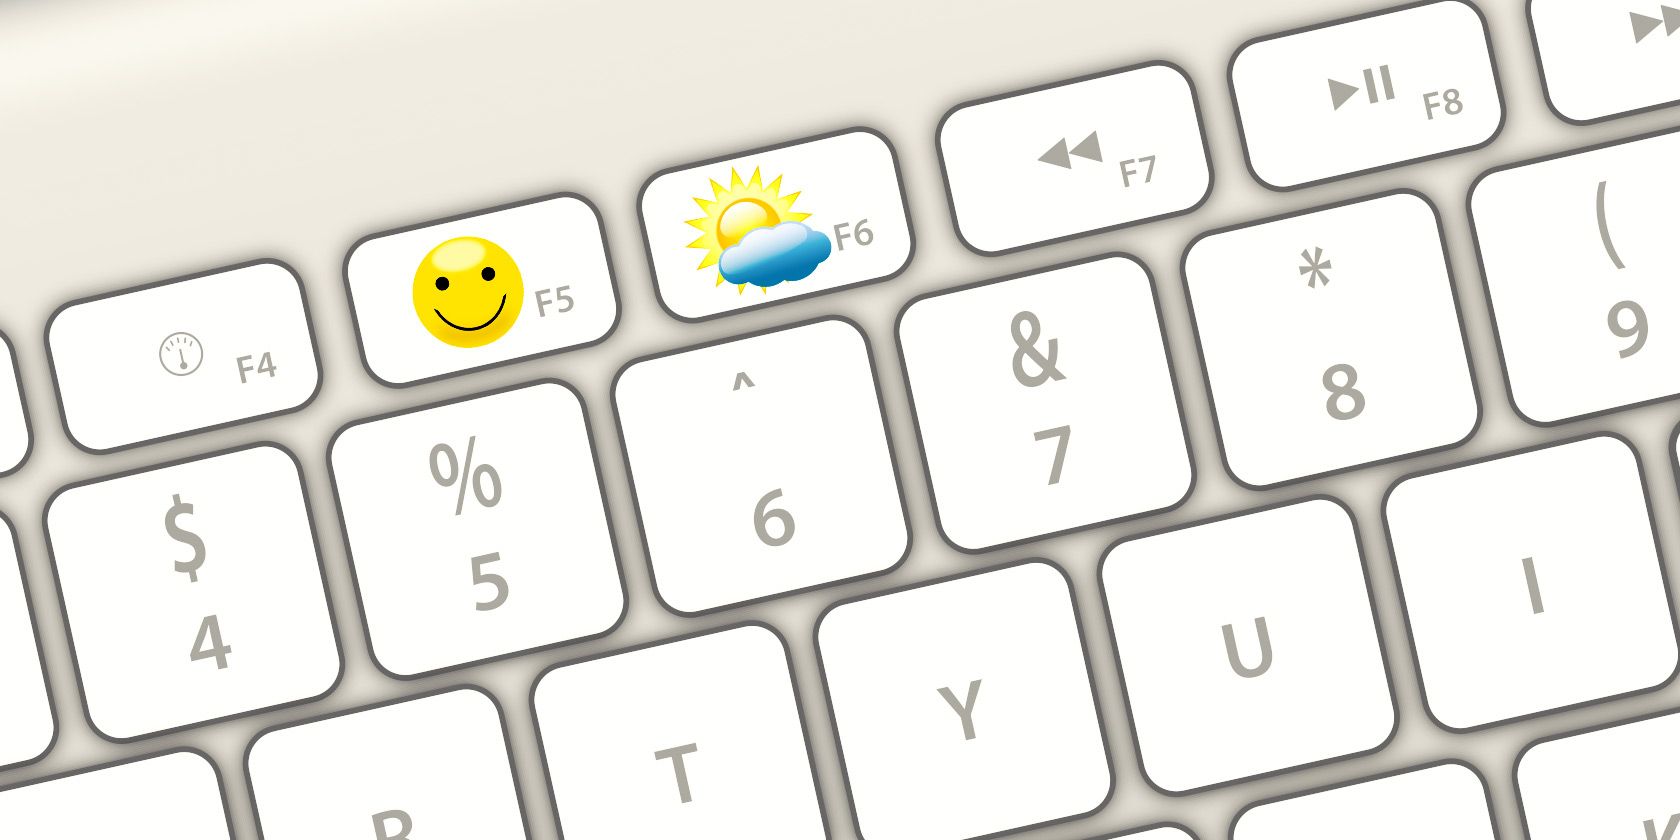 Mac function keys showing alternate symbols.